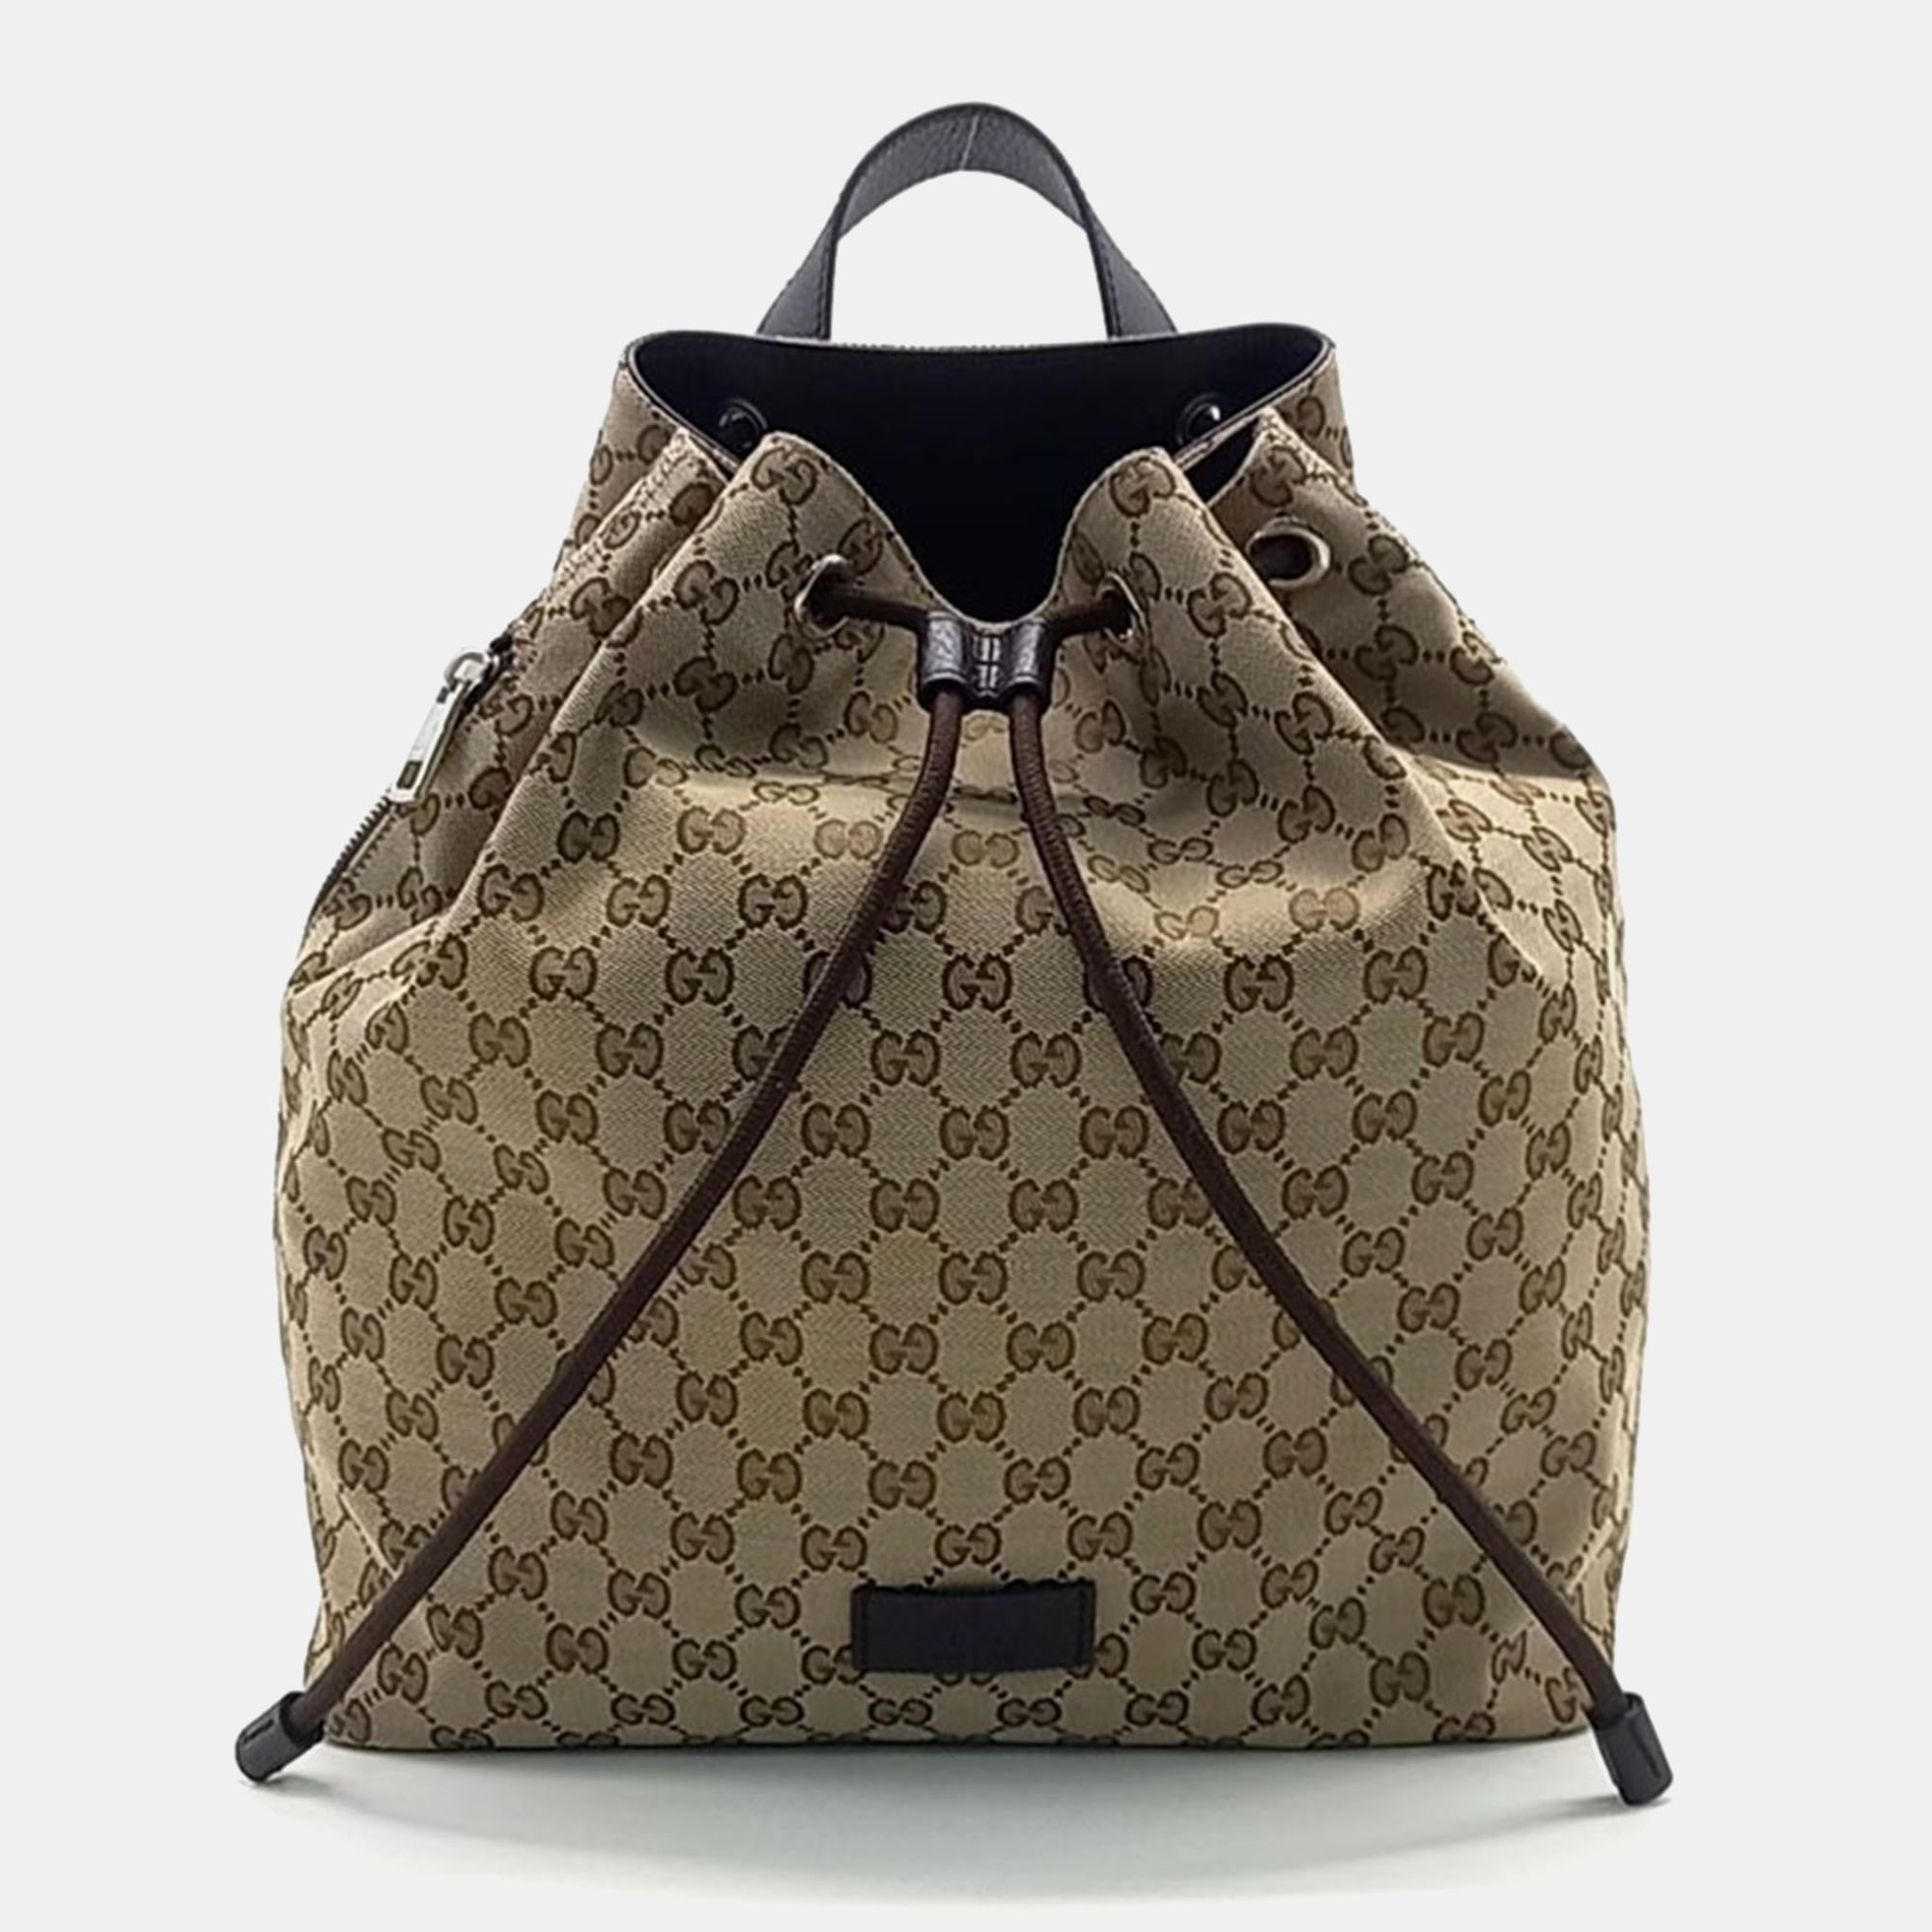 Gucci jacquard backpack